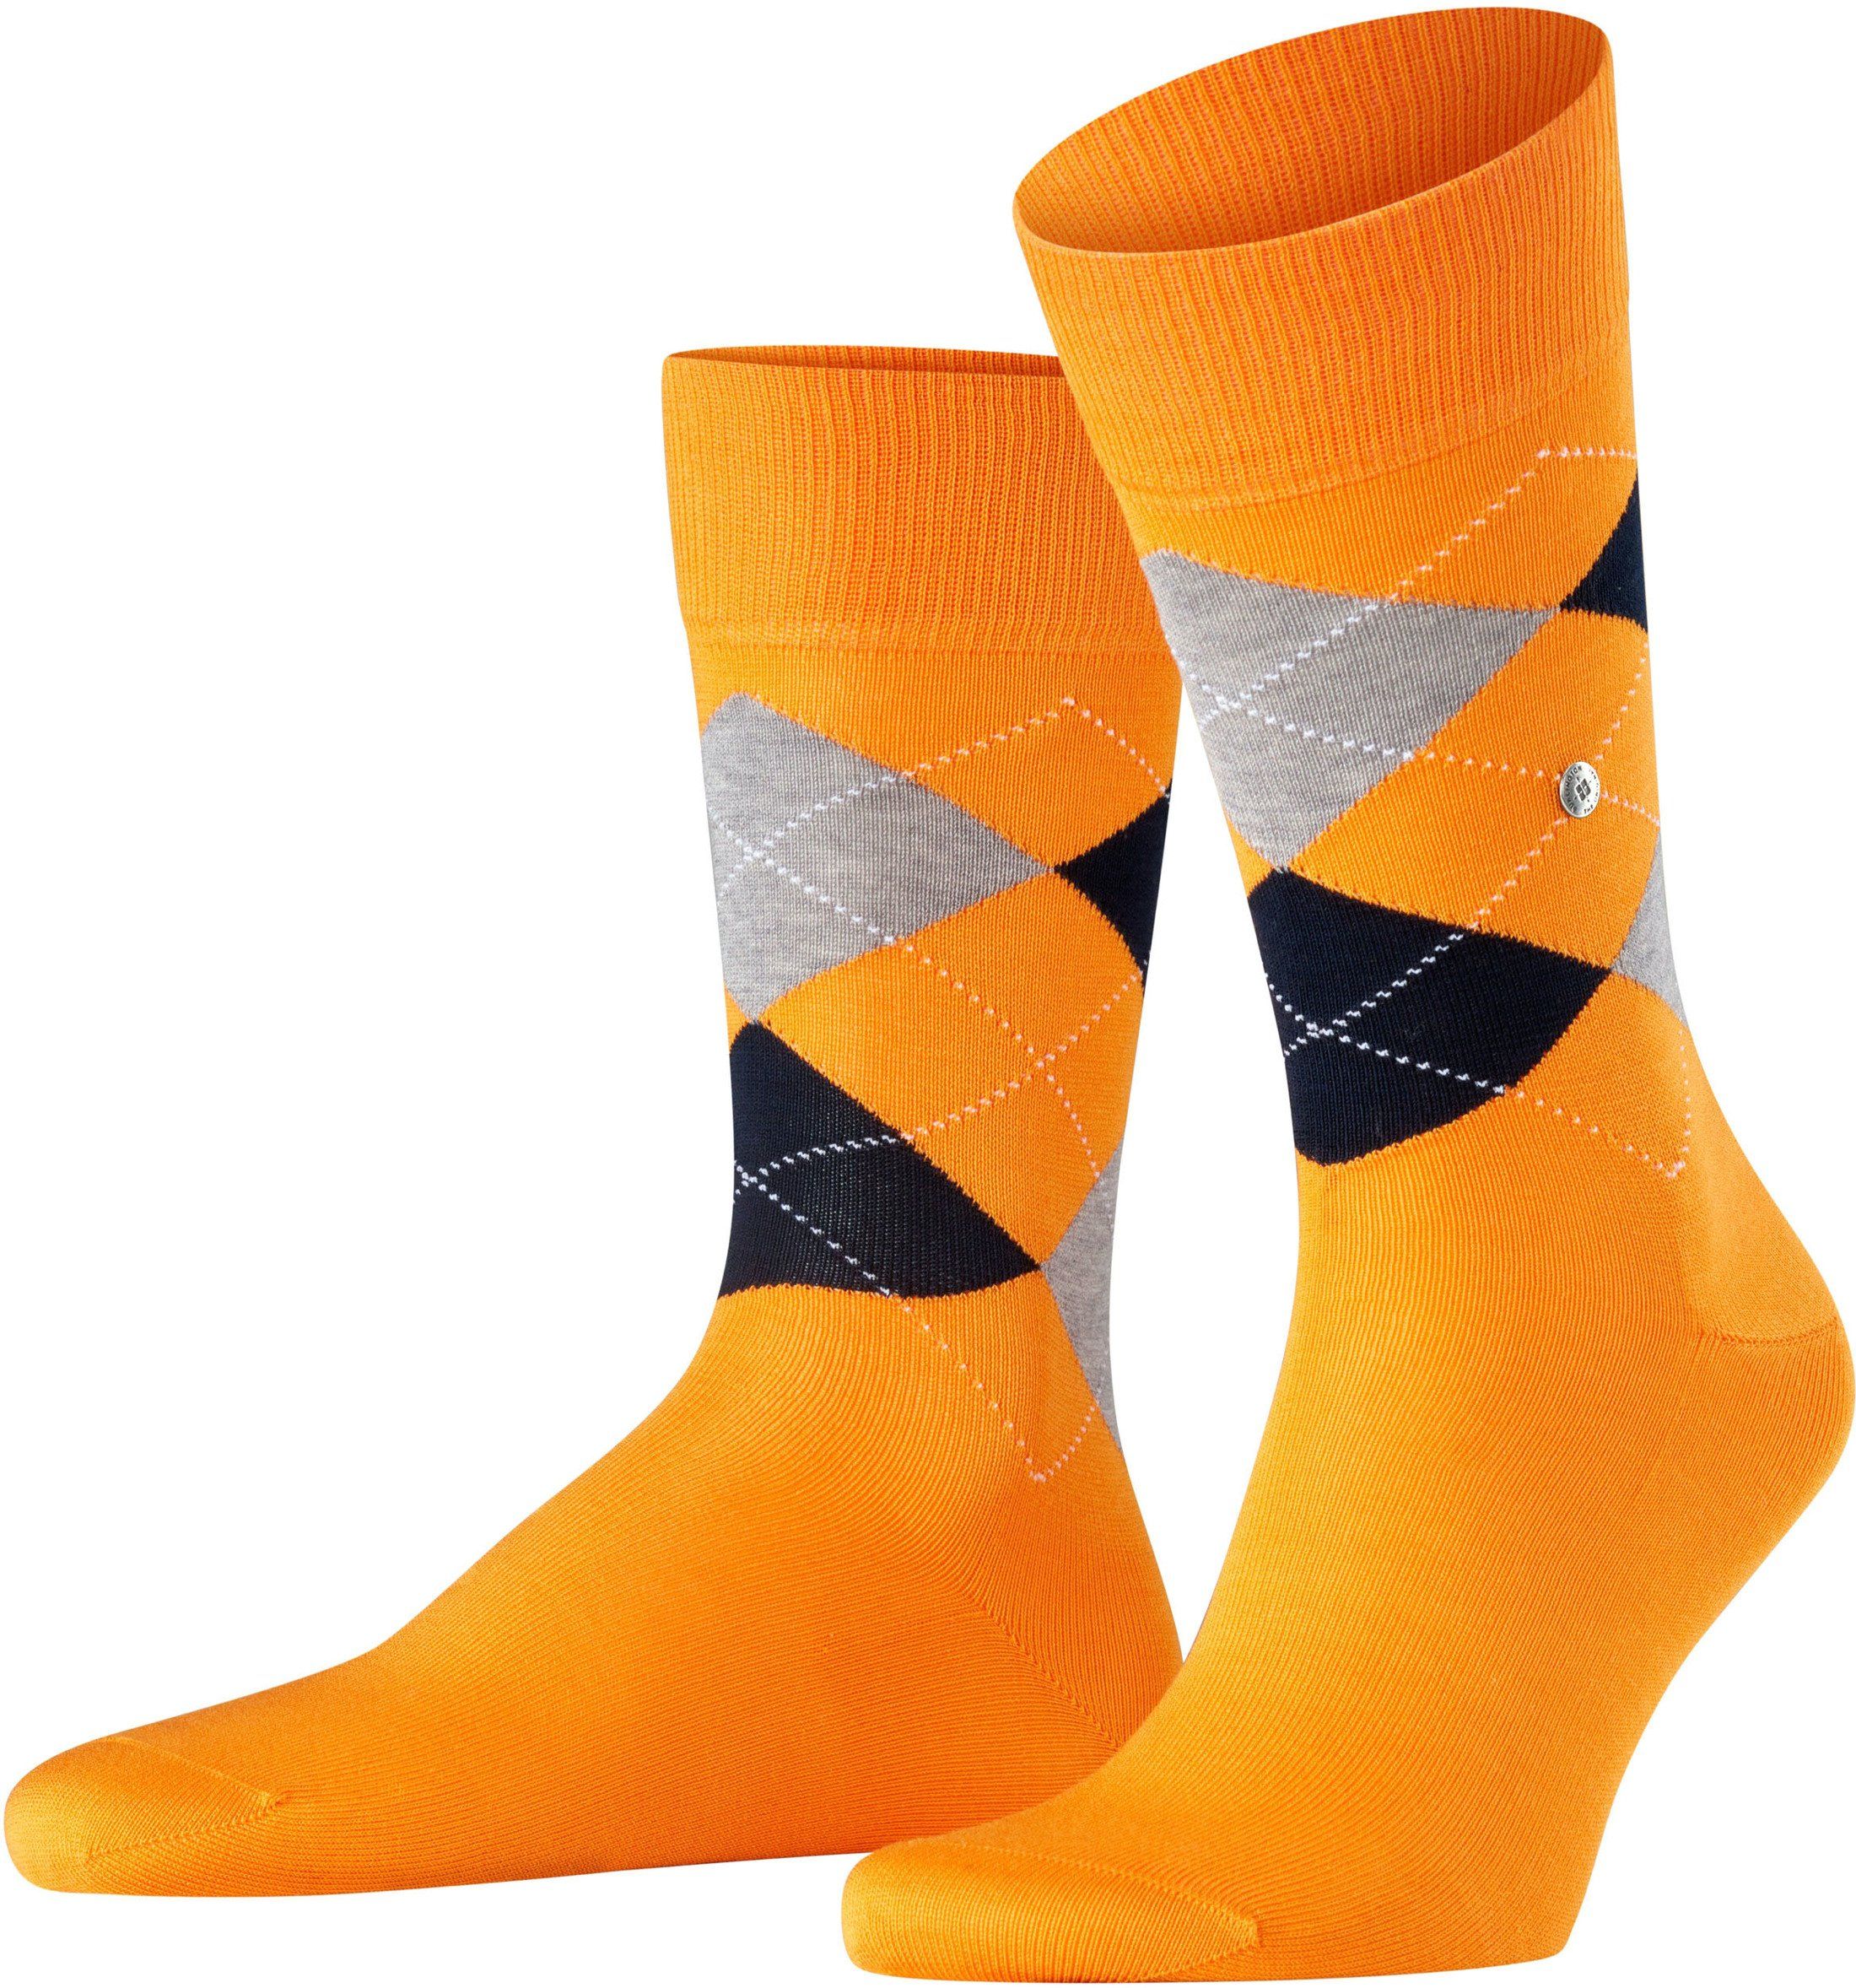 Burlington Socks Manchester 8950 Orange size 46-50